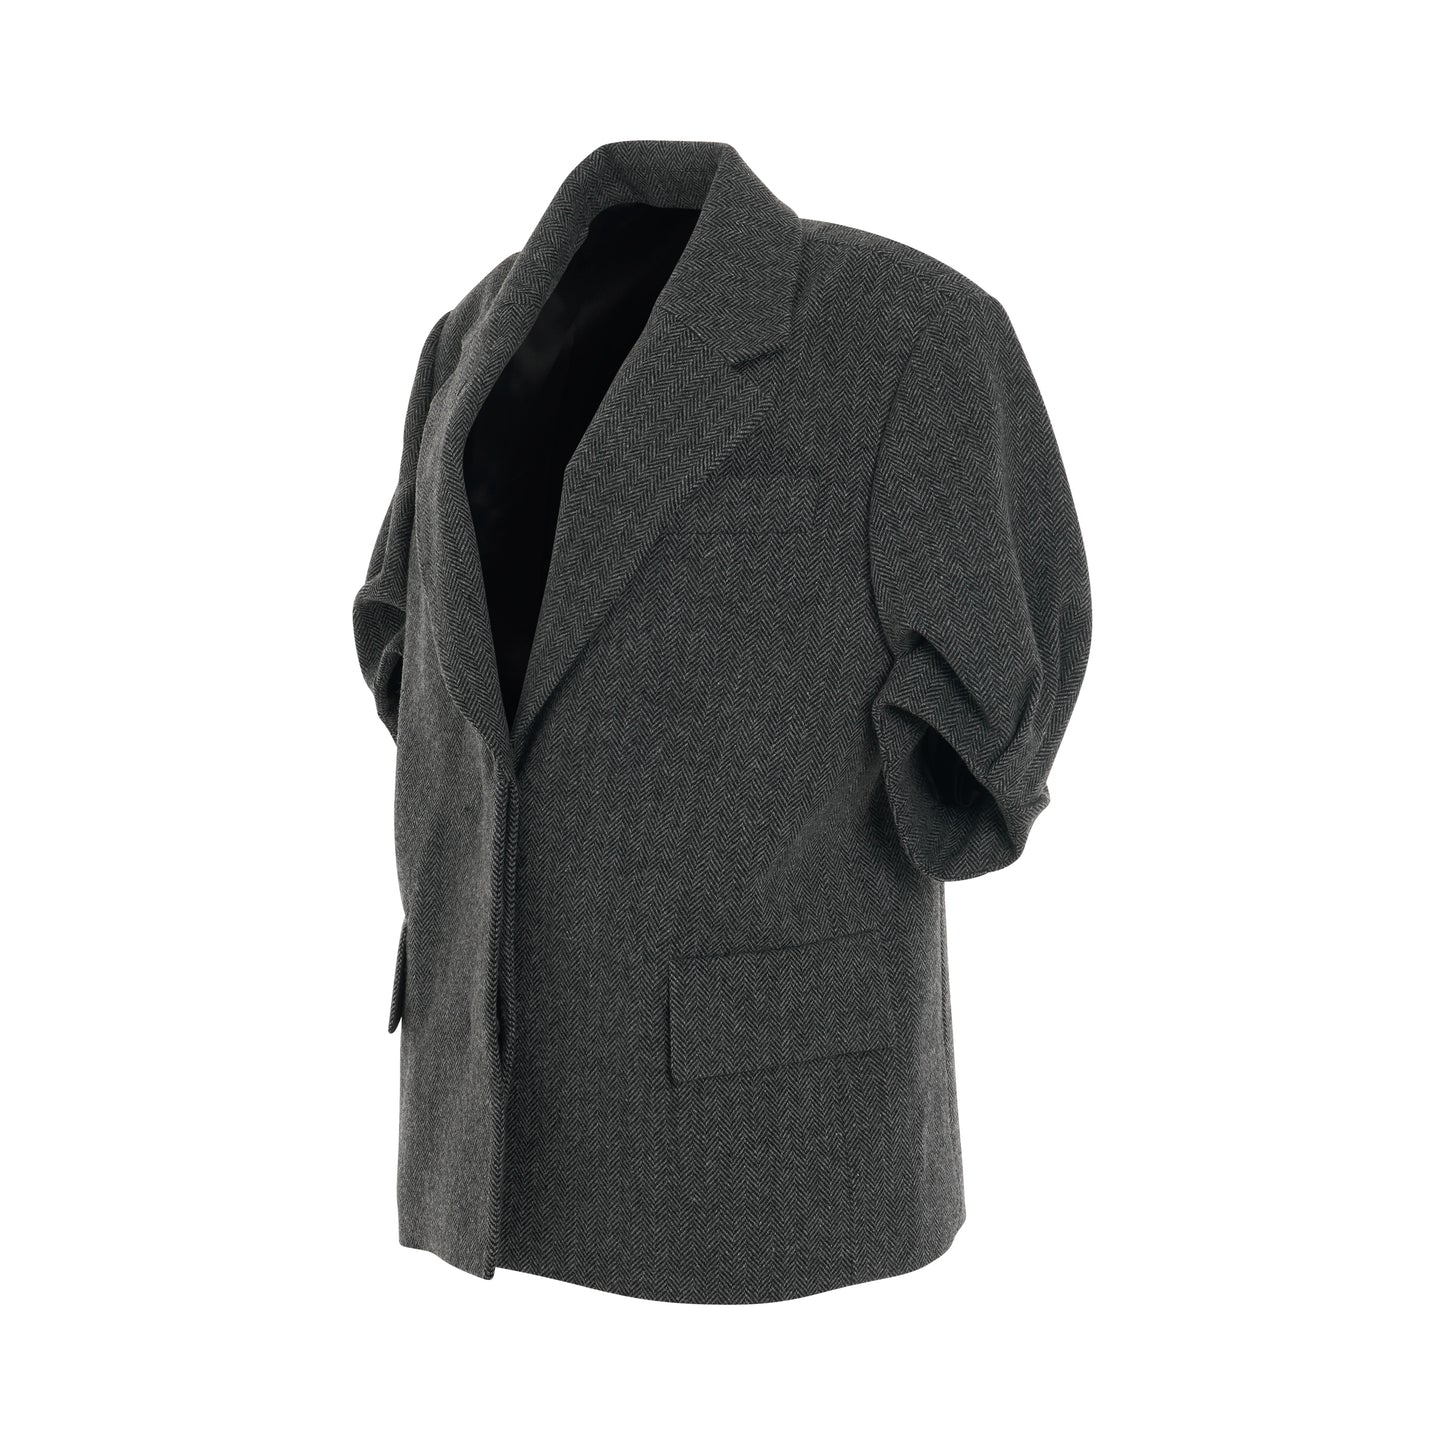 Puff Sleeve Tailored Jacket in Dark Grey